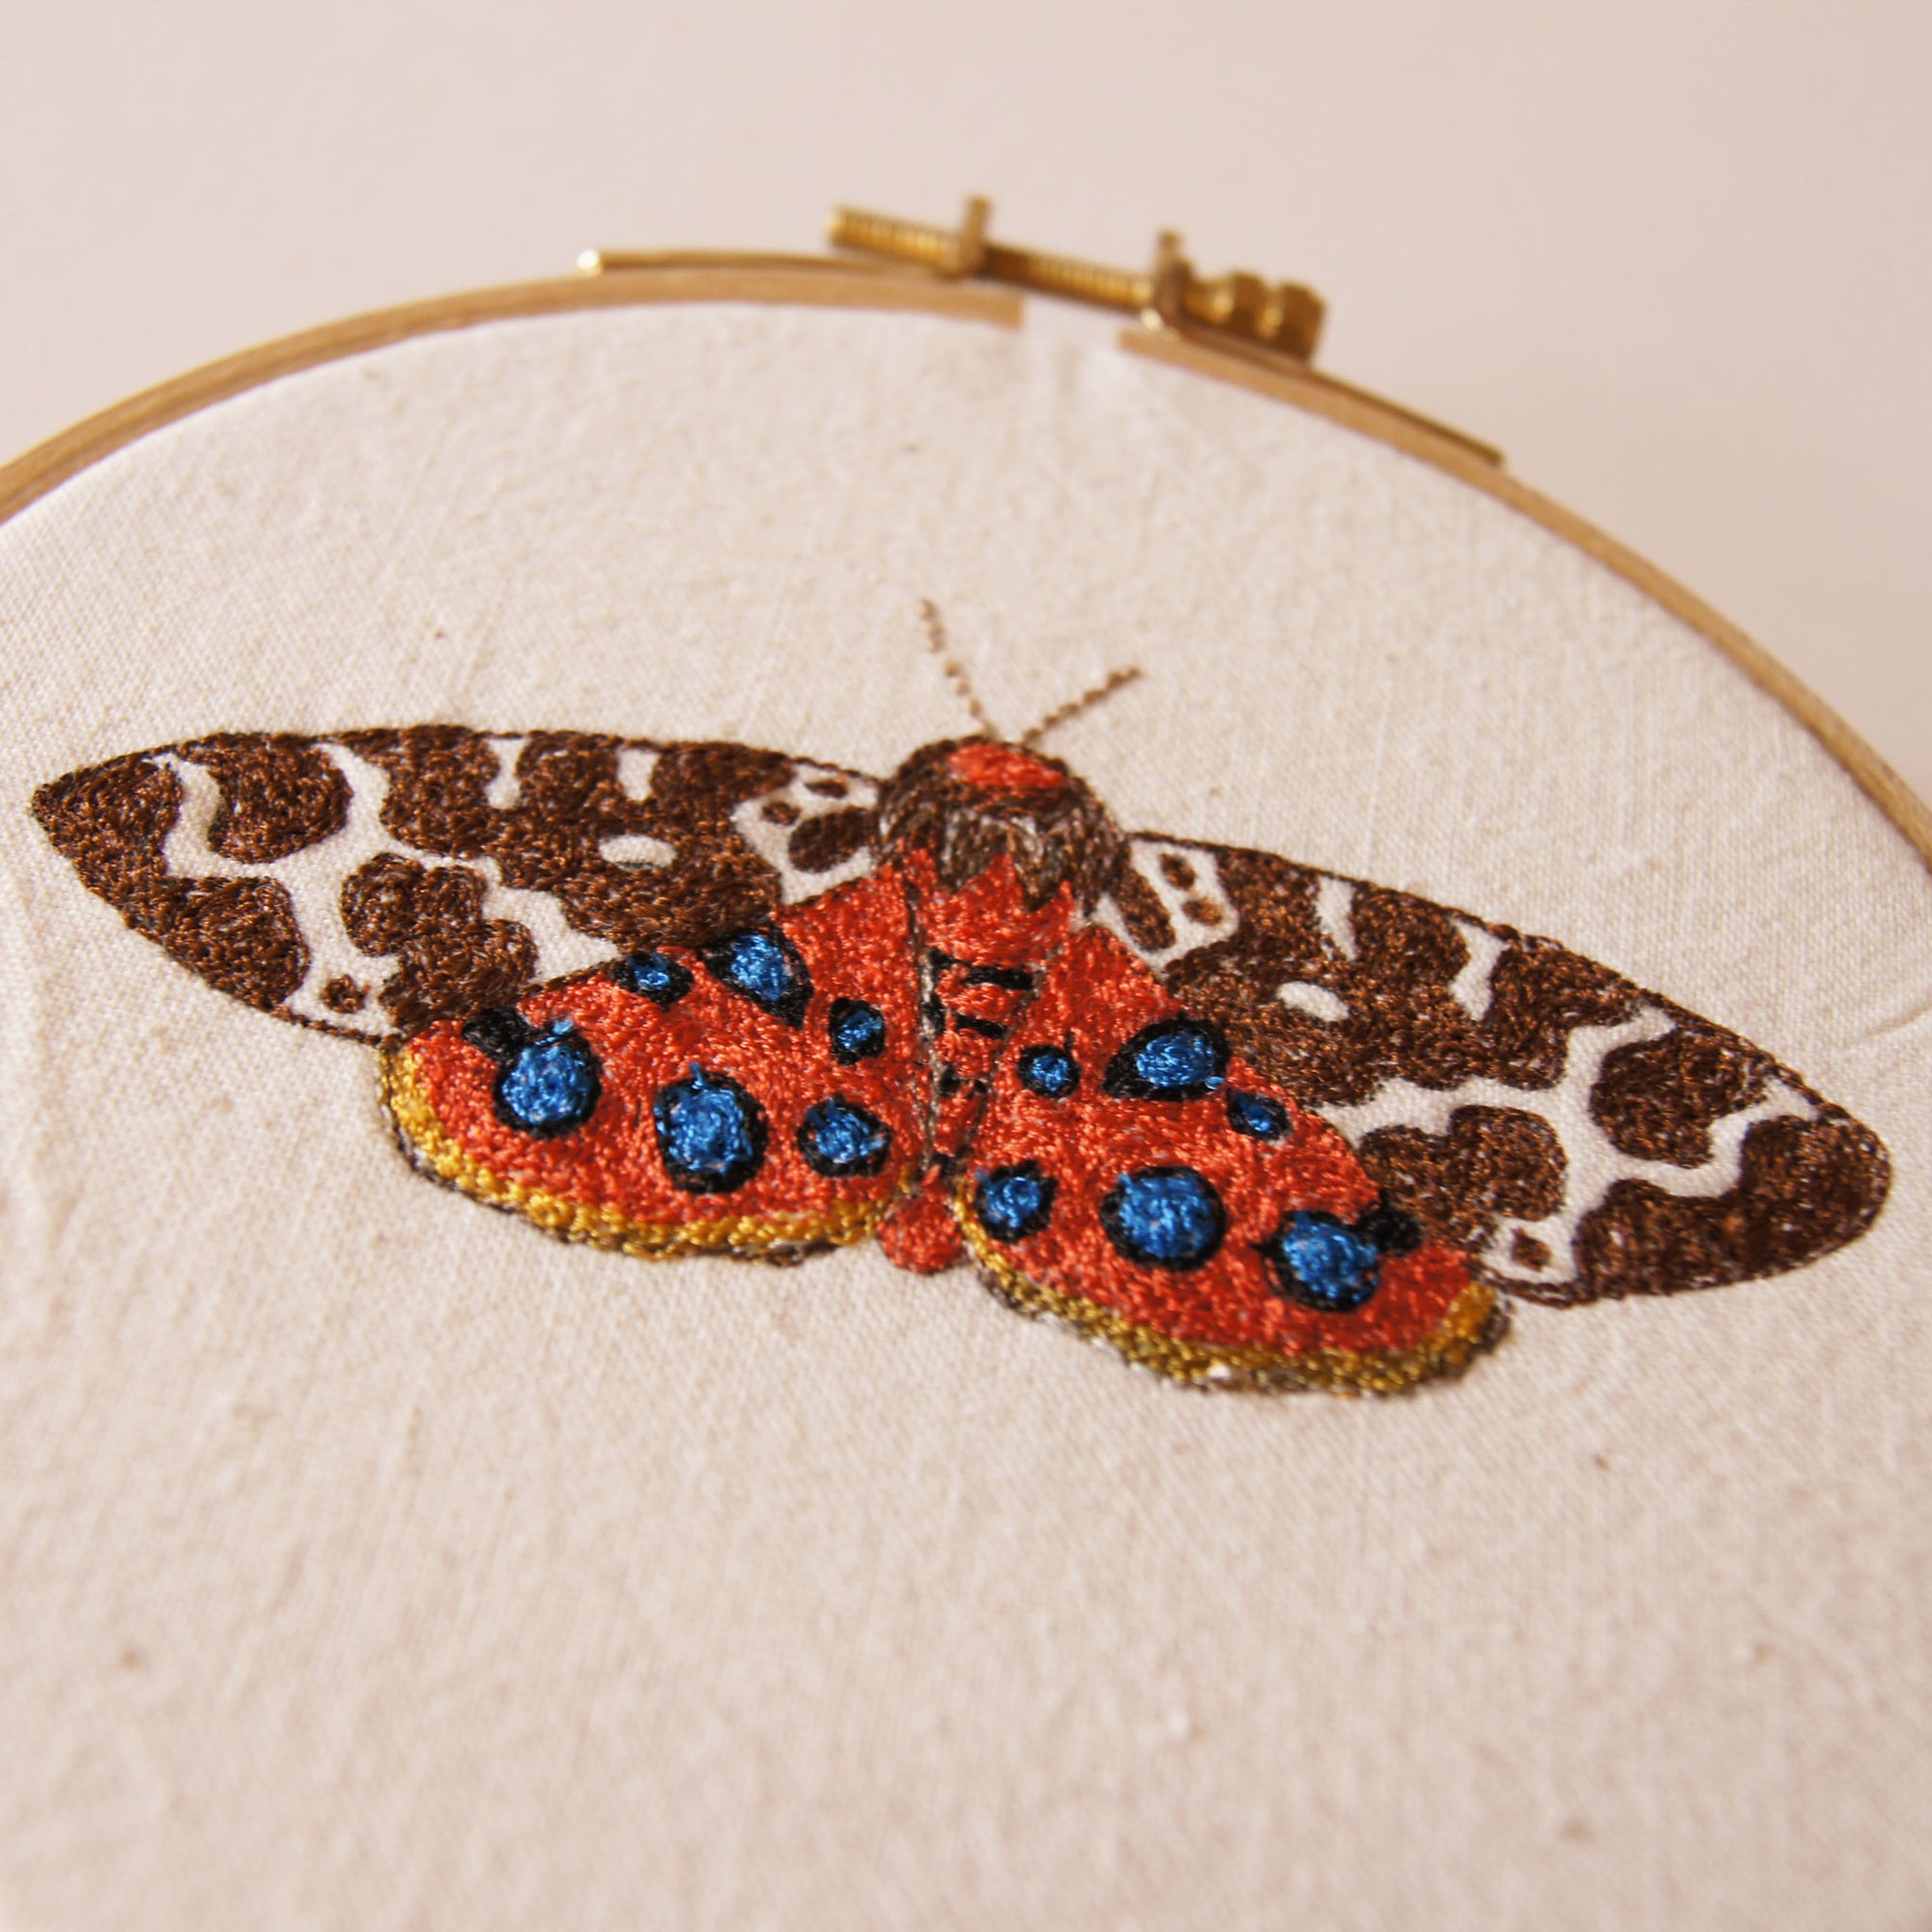 Embroidered Hoop Art Garden Tiger Moth Insect Fiber Art